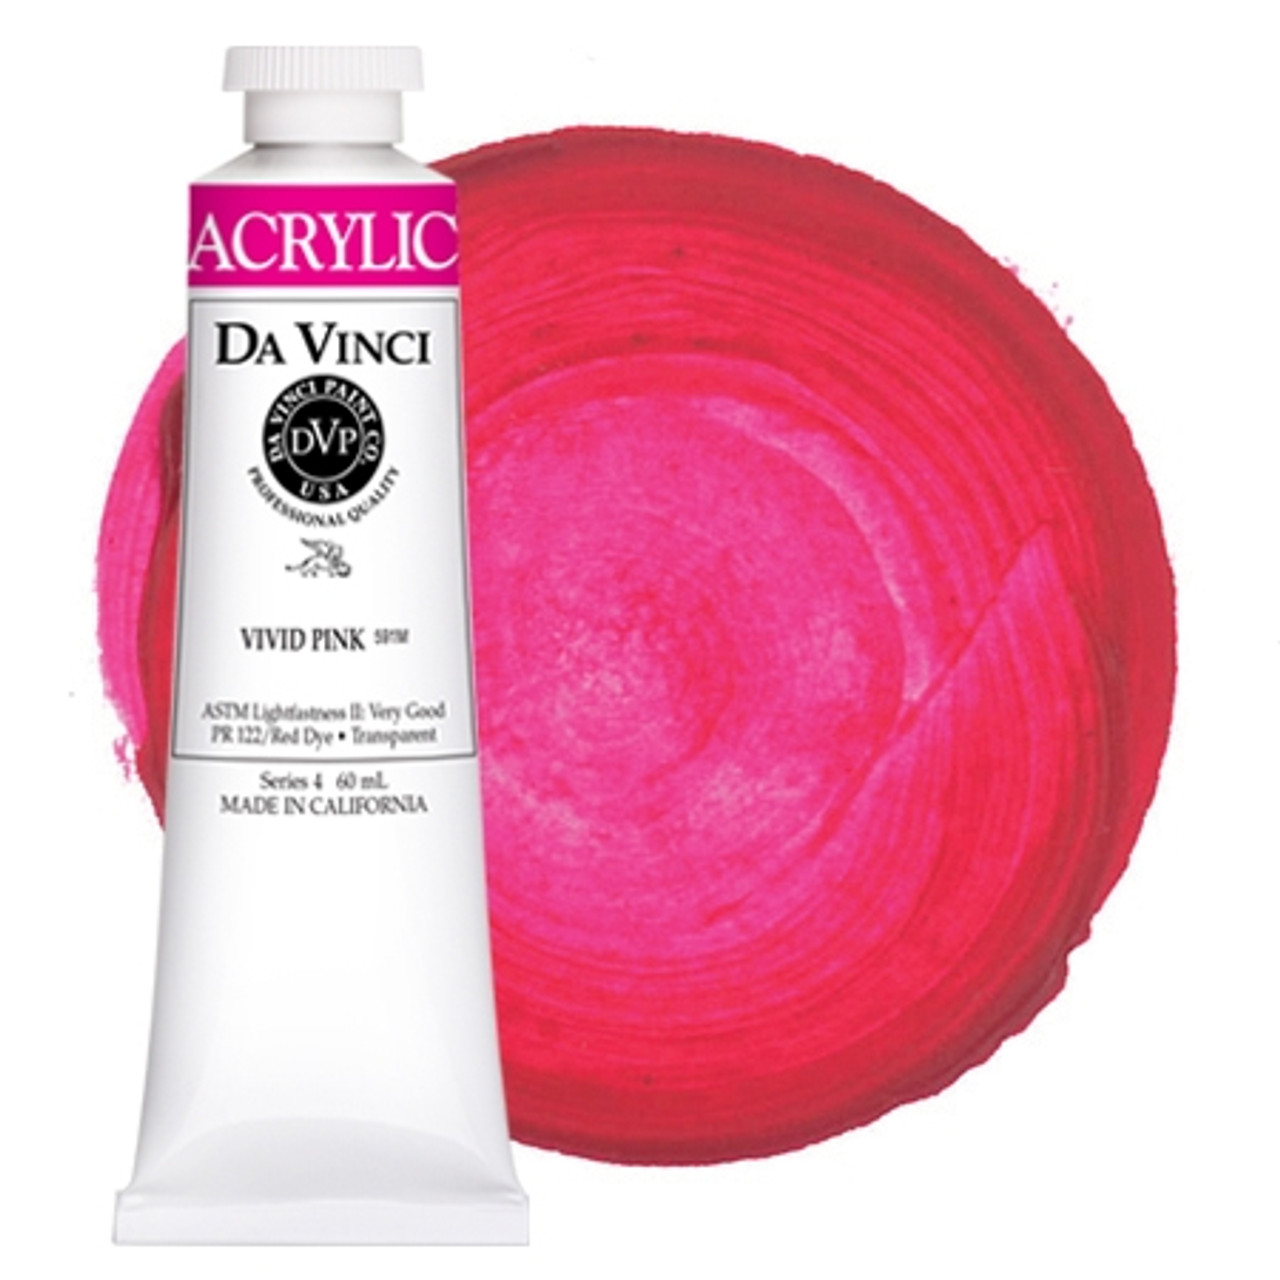 Vivid Pink (60mL HB Acrylic)